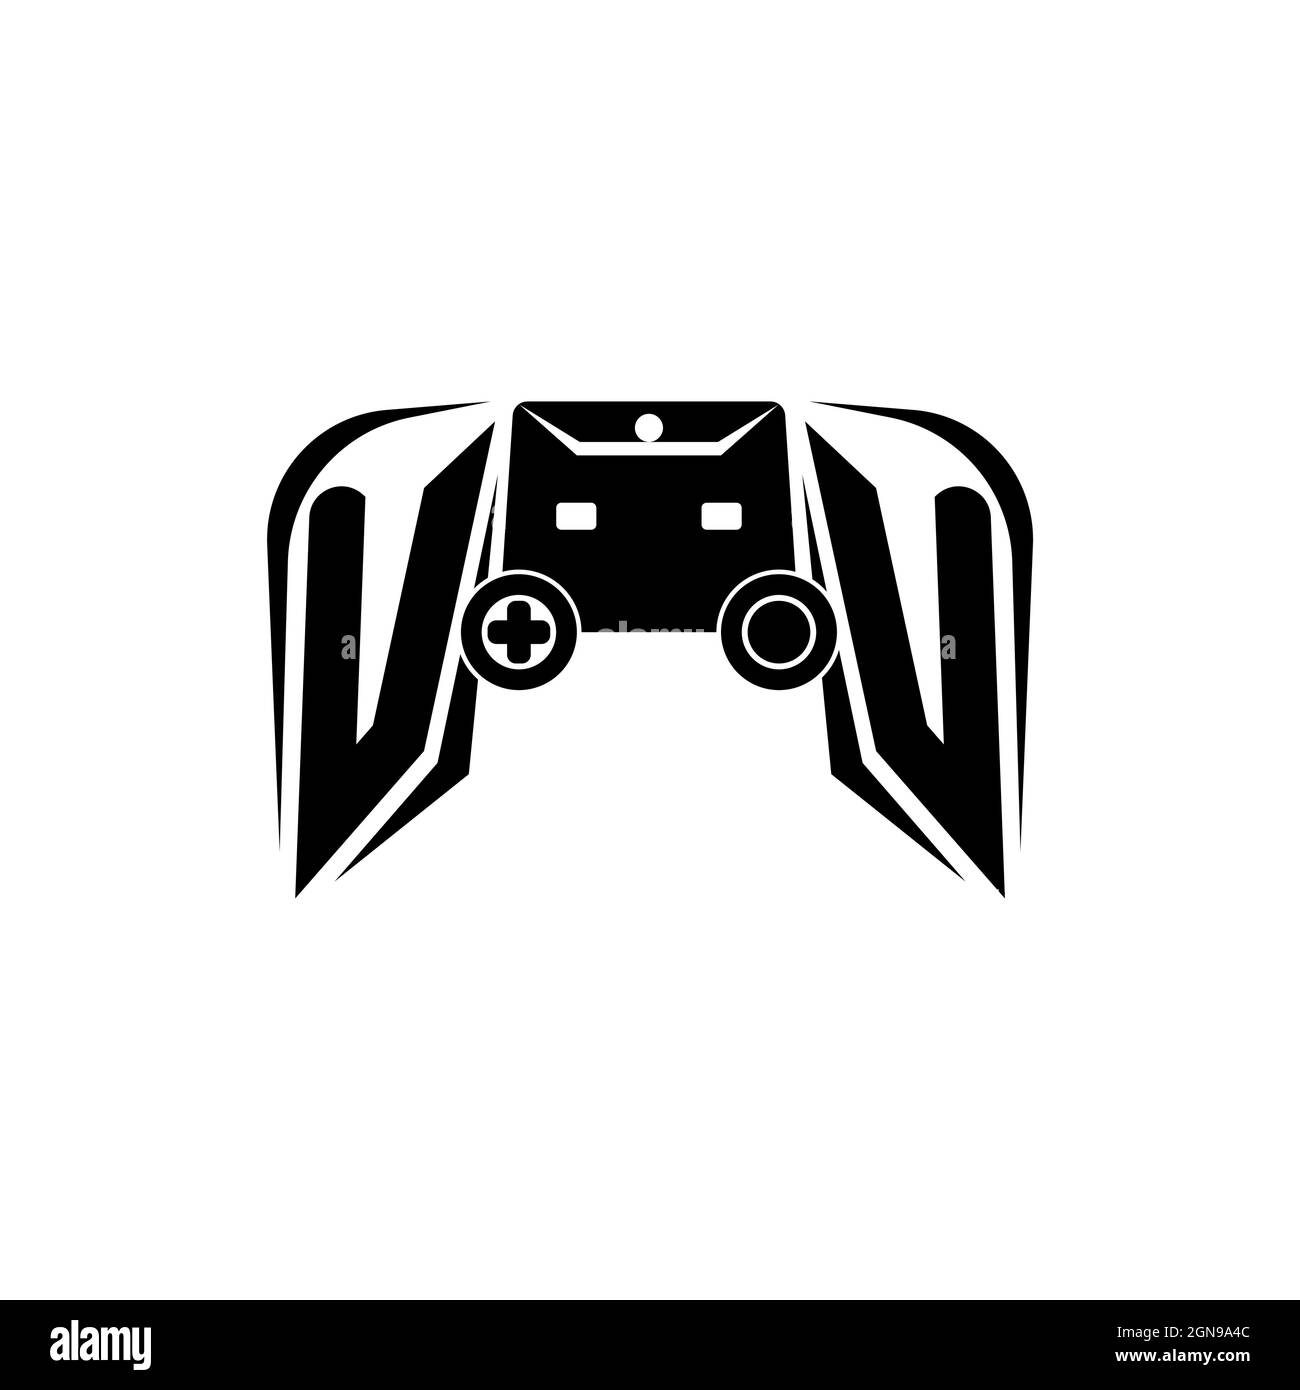 Premium Vector  Initial r gaming logo design template inspiration vector  illustration